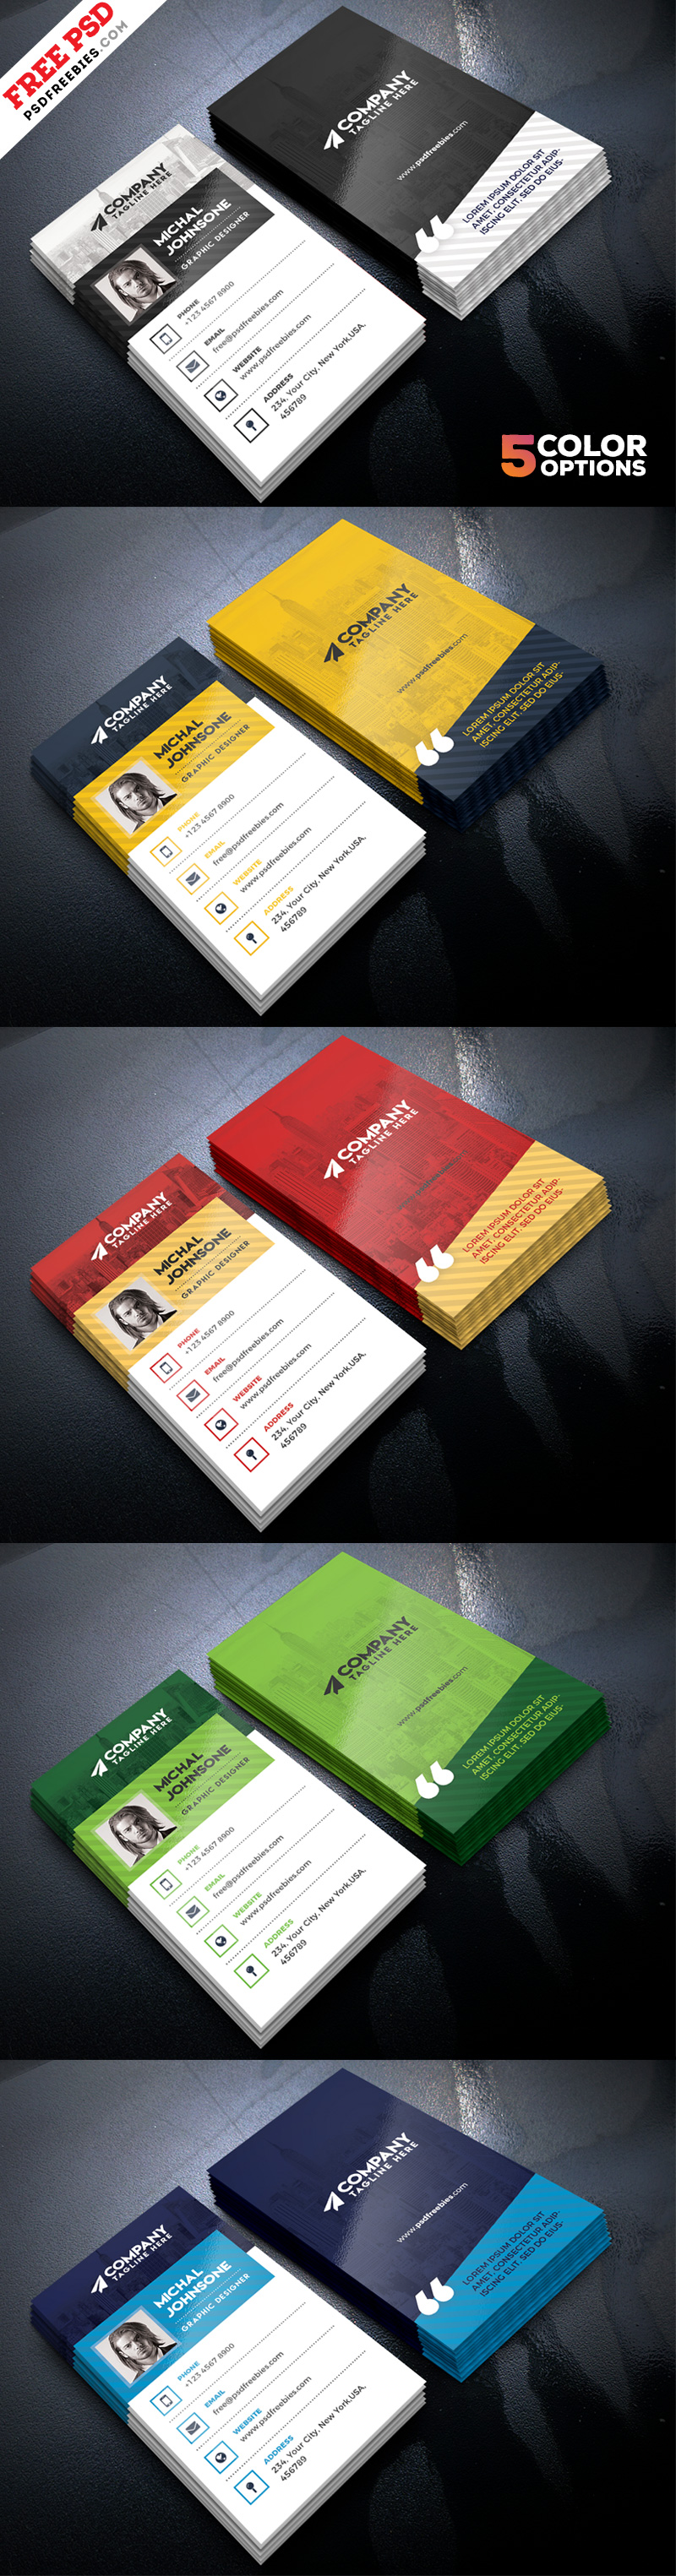 Corporate Business Cards Design Free PSD